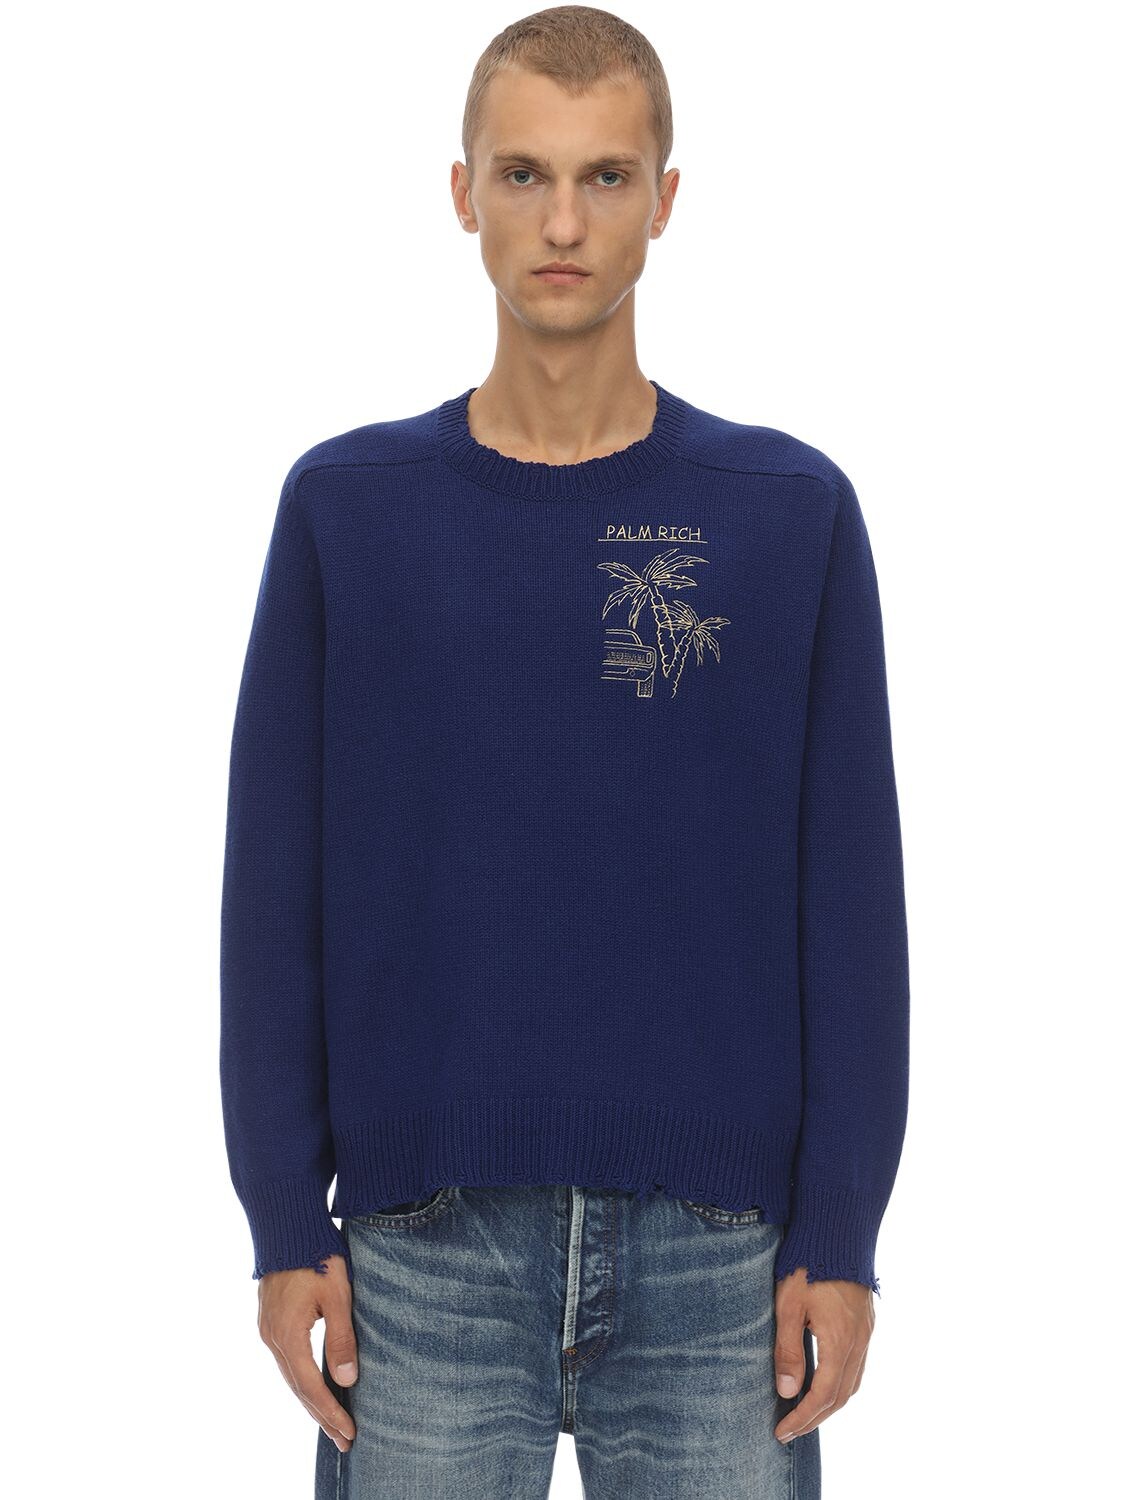 Palm Rich Merino Wool & Cashmere Sweater